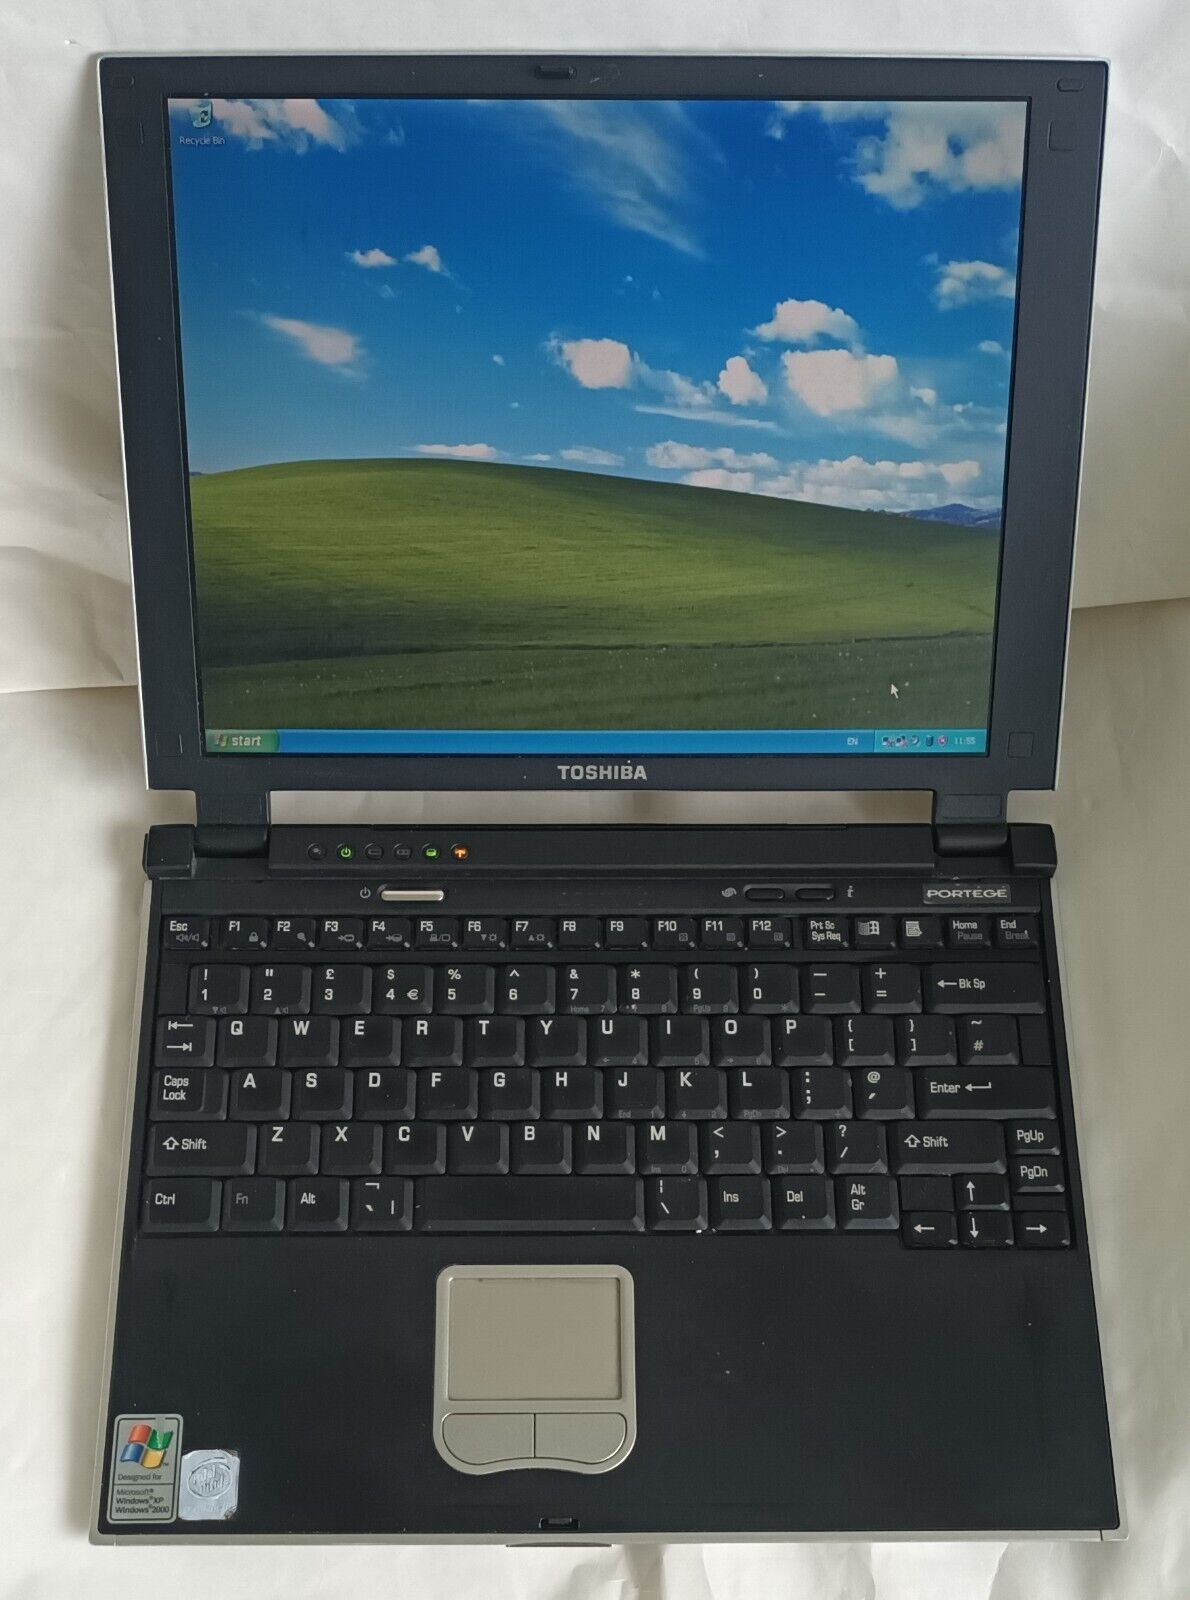 Toshiba Portege P2000 PP200E Laptop Notebook 12.1\